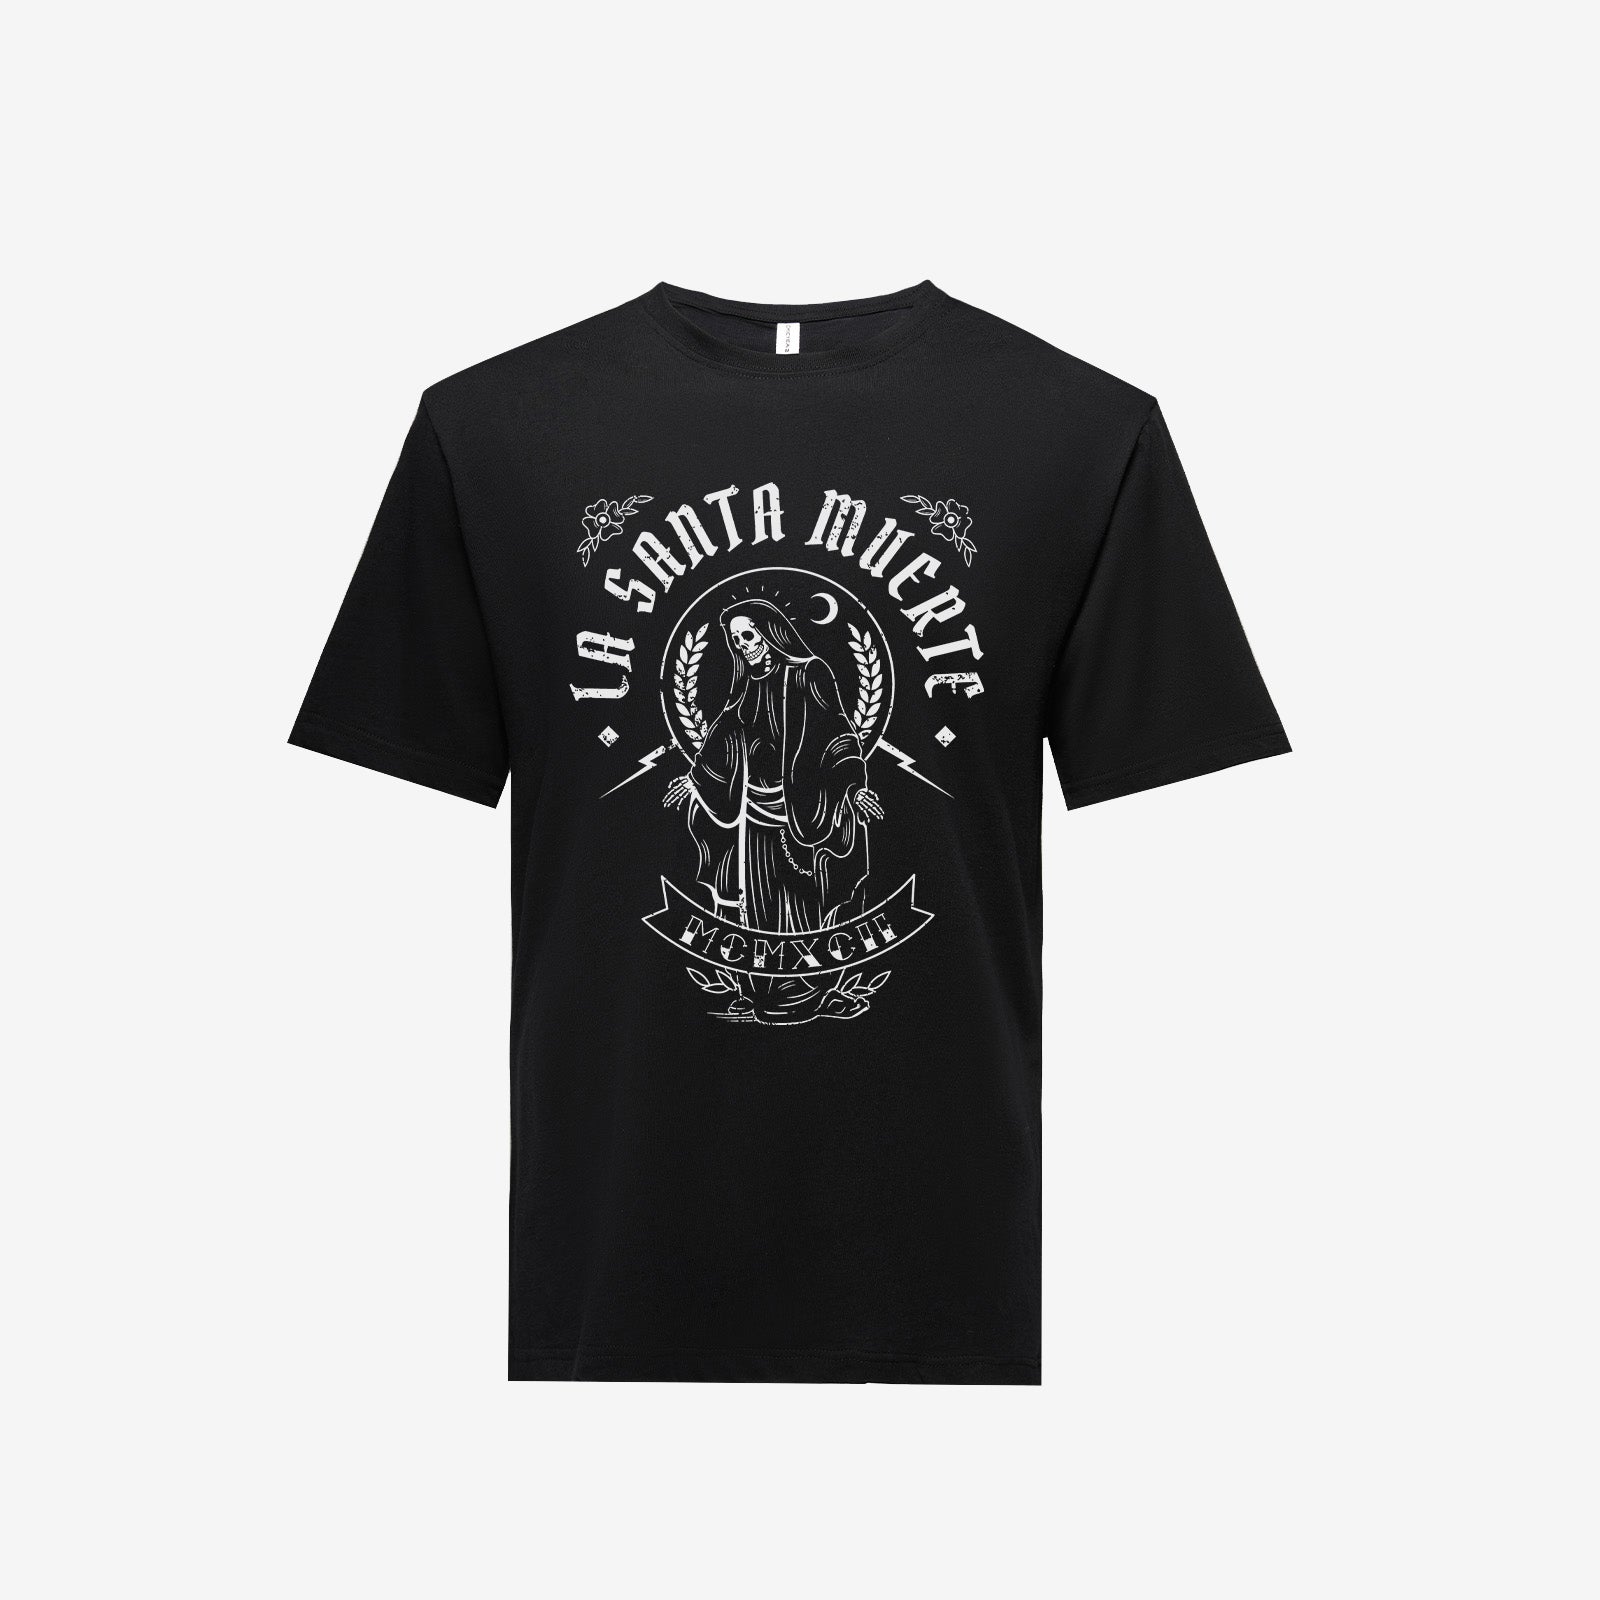 Minnieskull La Santa Muerte Skull Printed Oversized Design T-Shirt